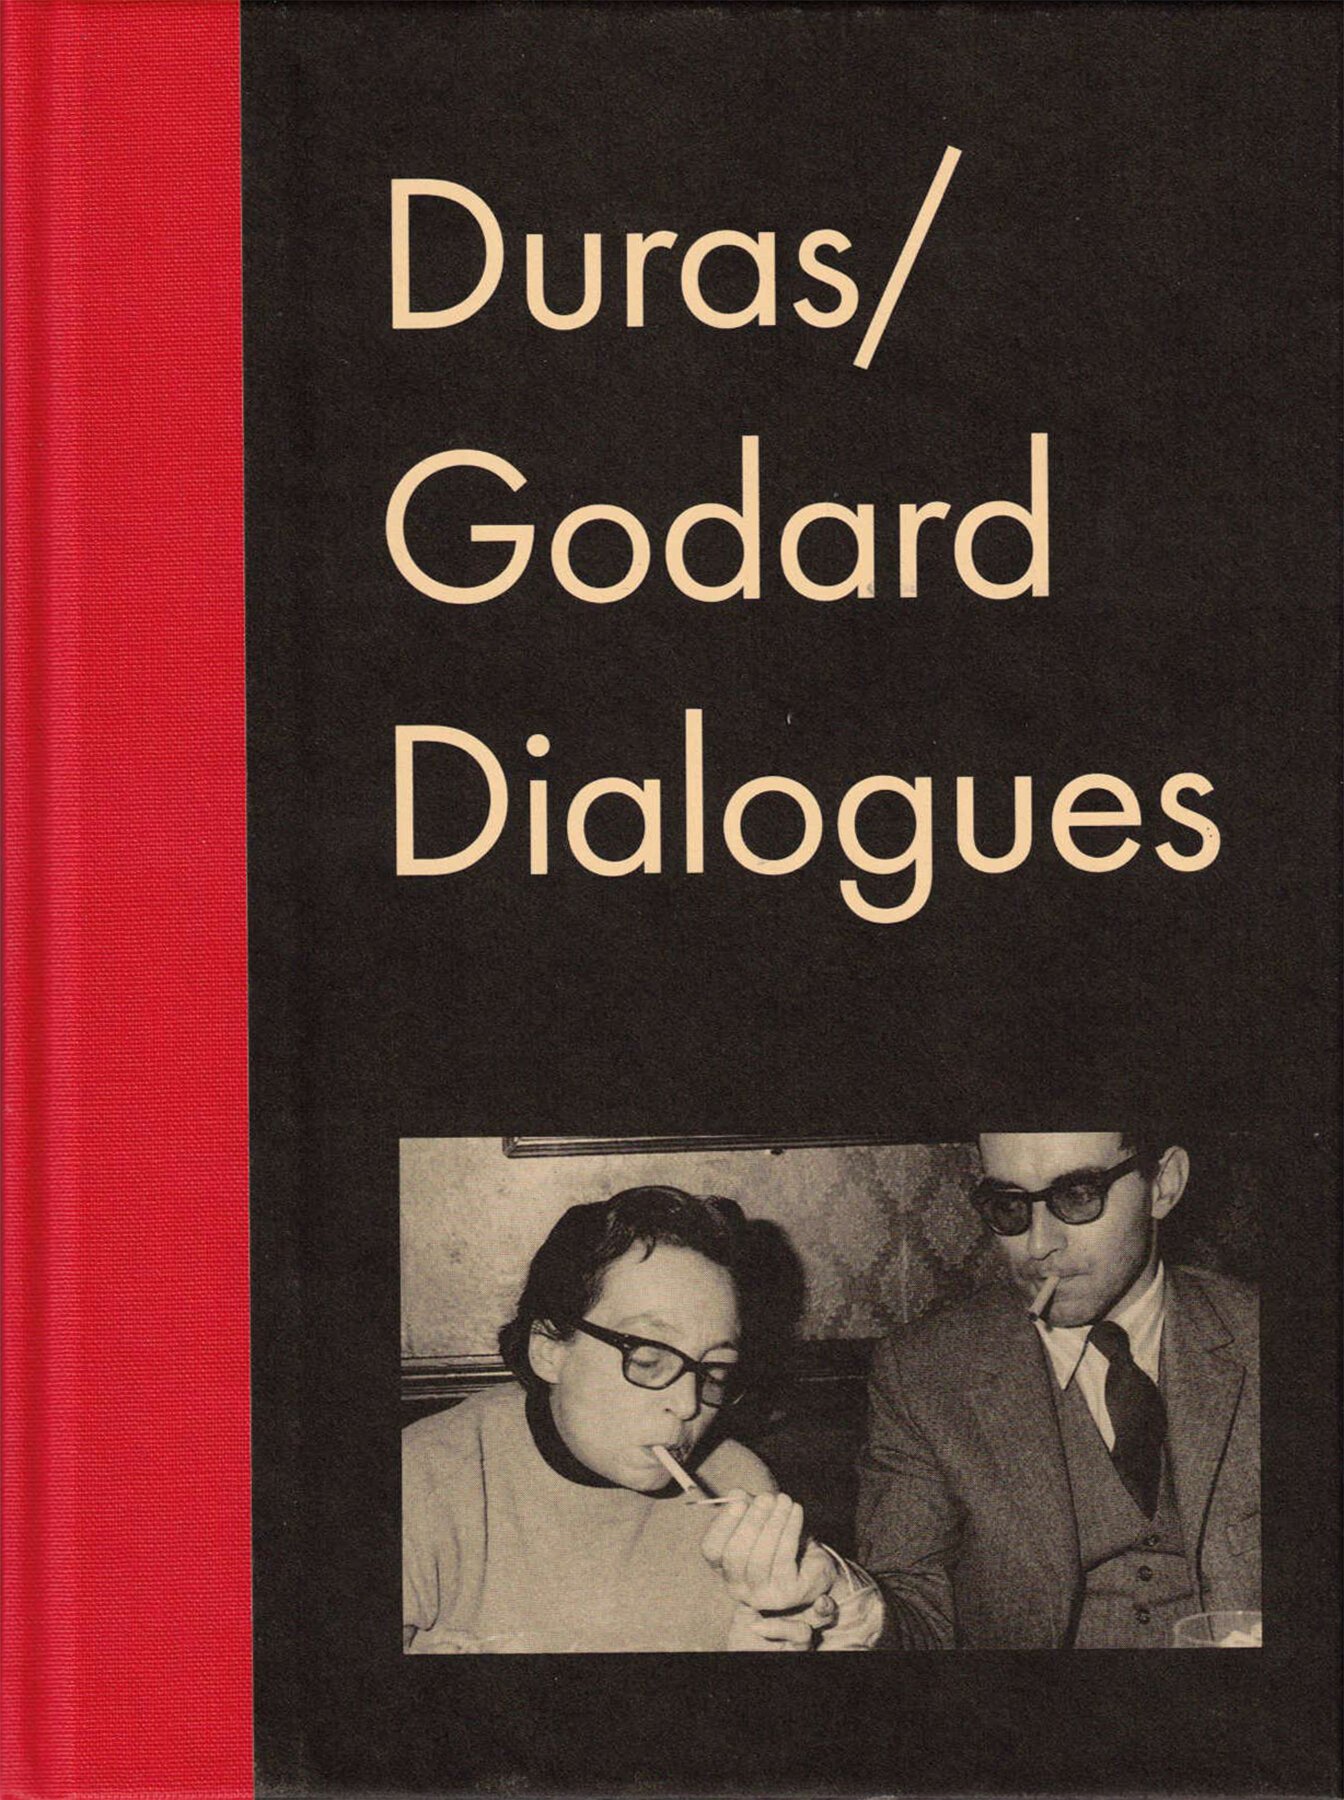 Duras/Godard Dialogues — Film Desk Books